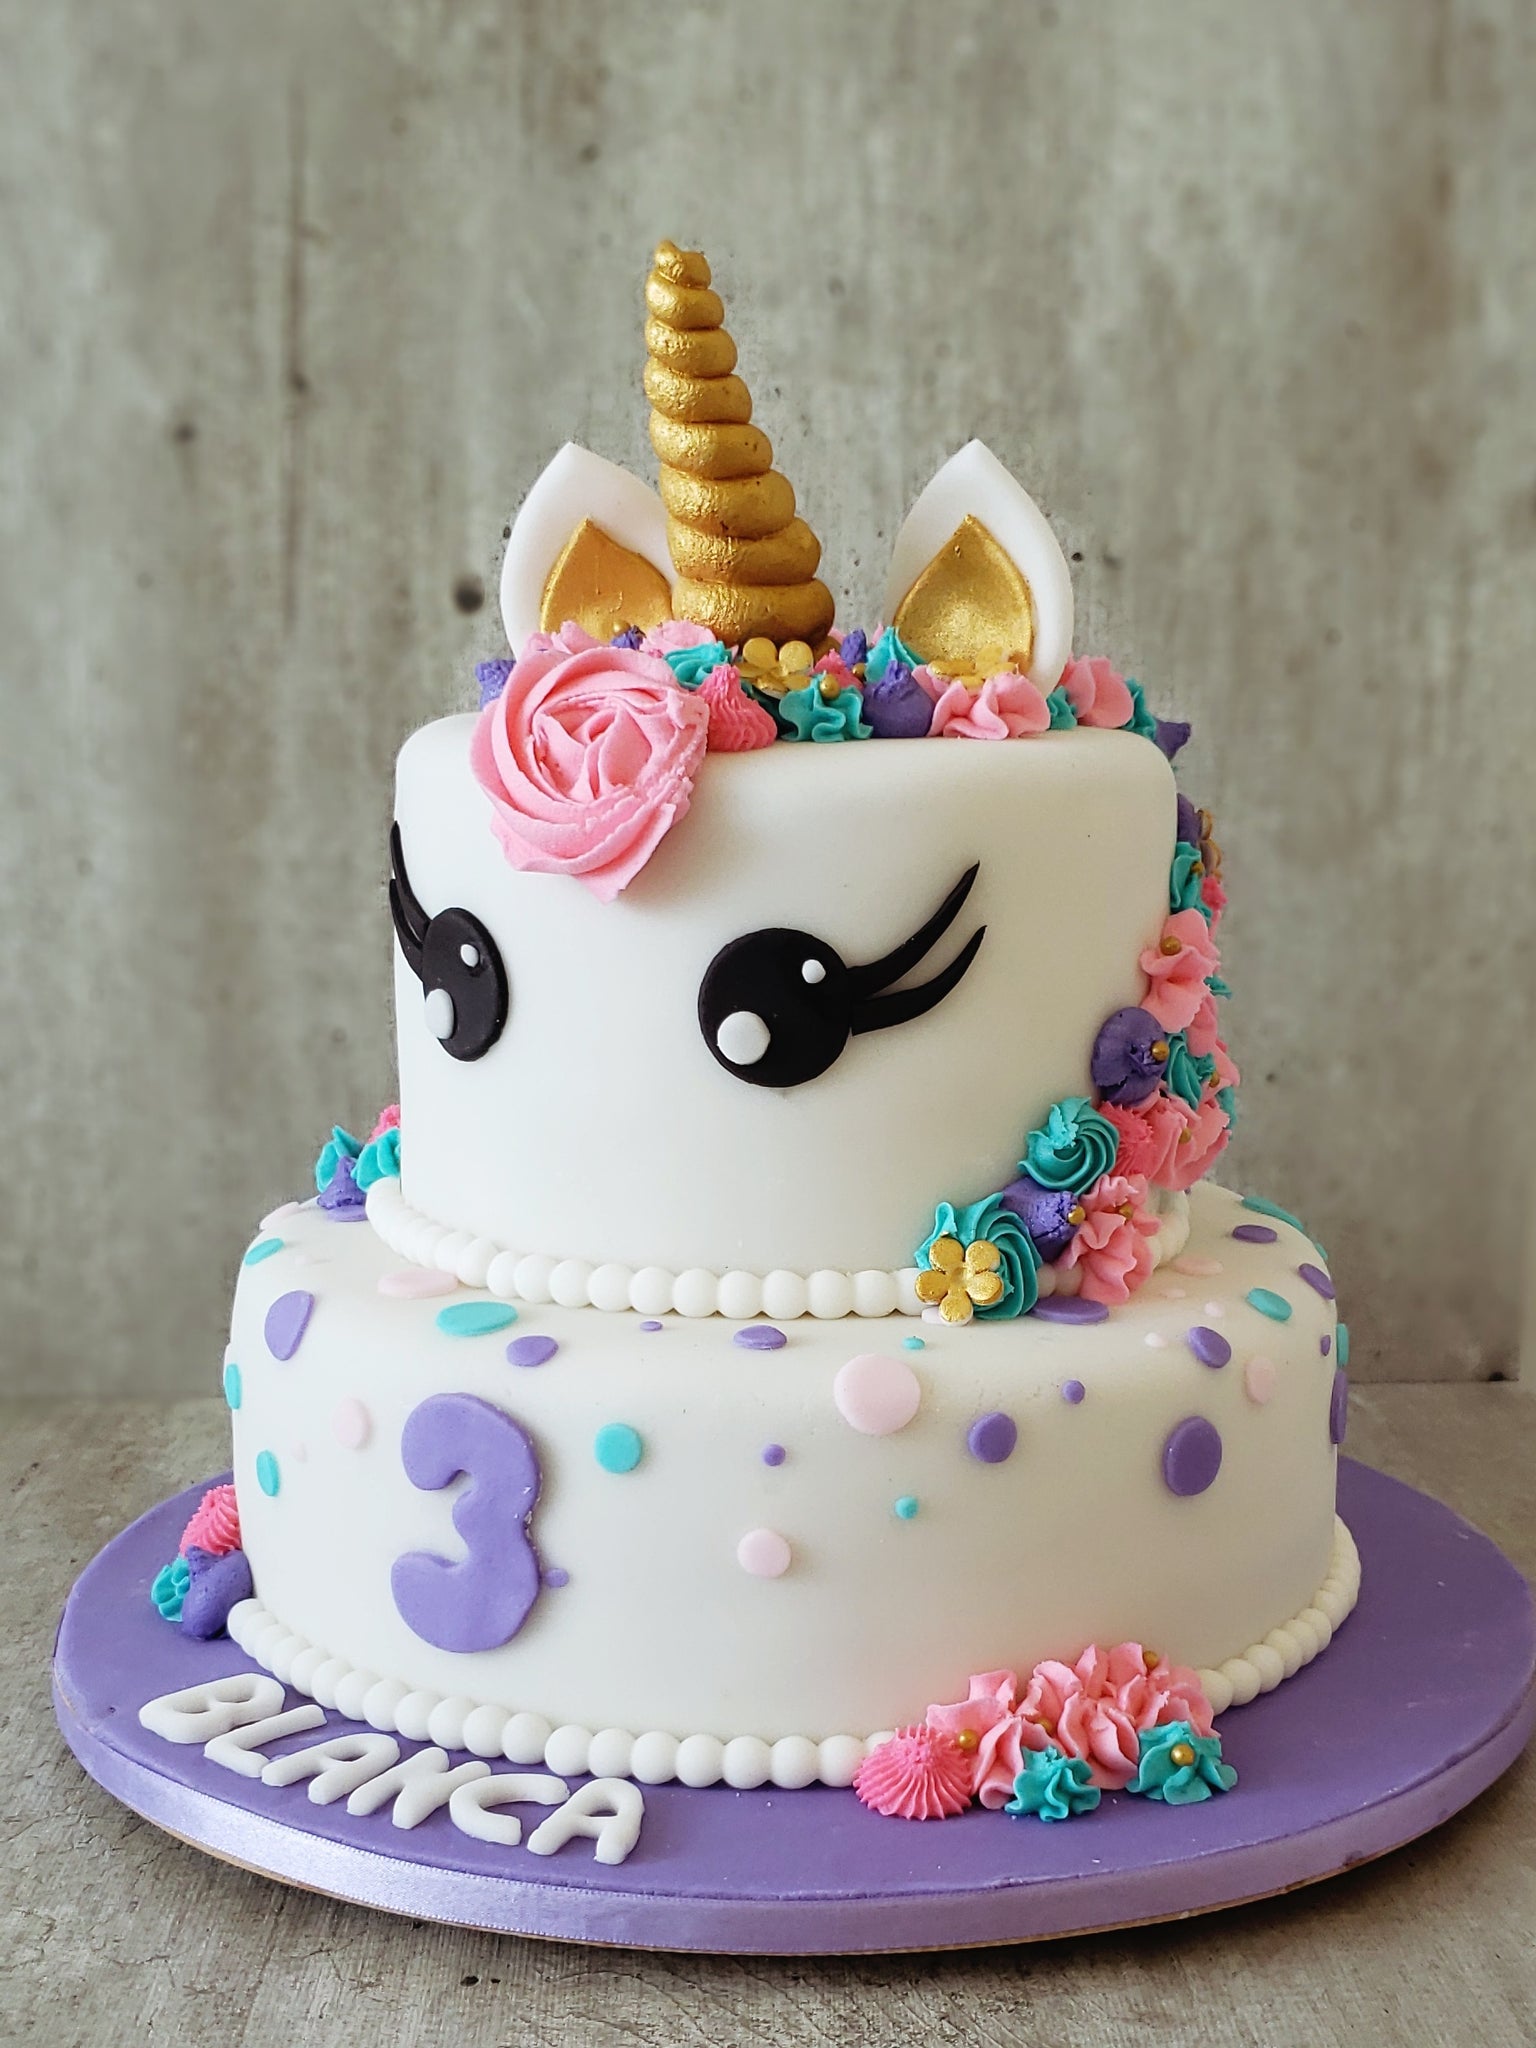 Arriba 80+ imagen pastel de unicornio 2 pisos